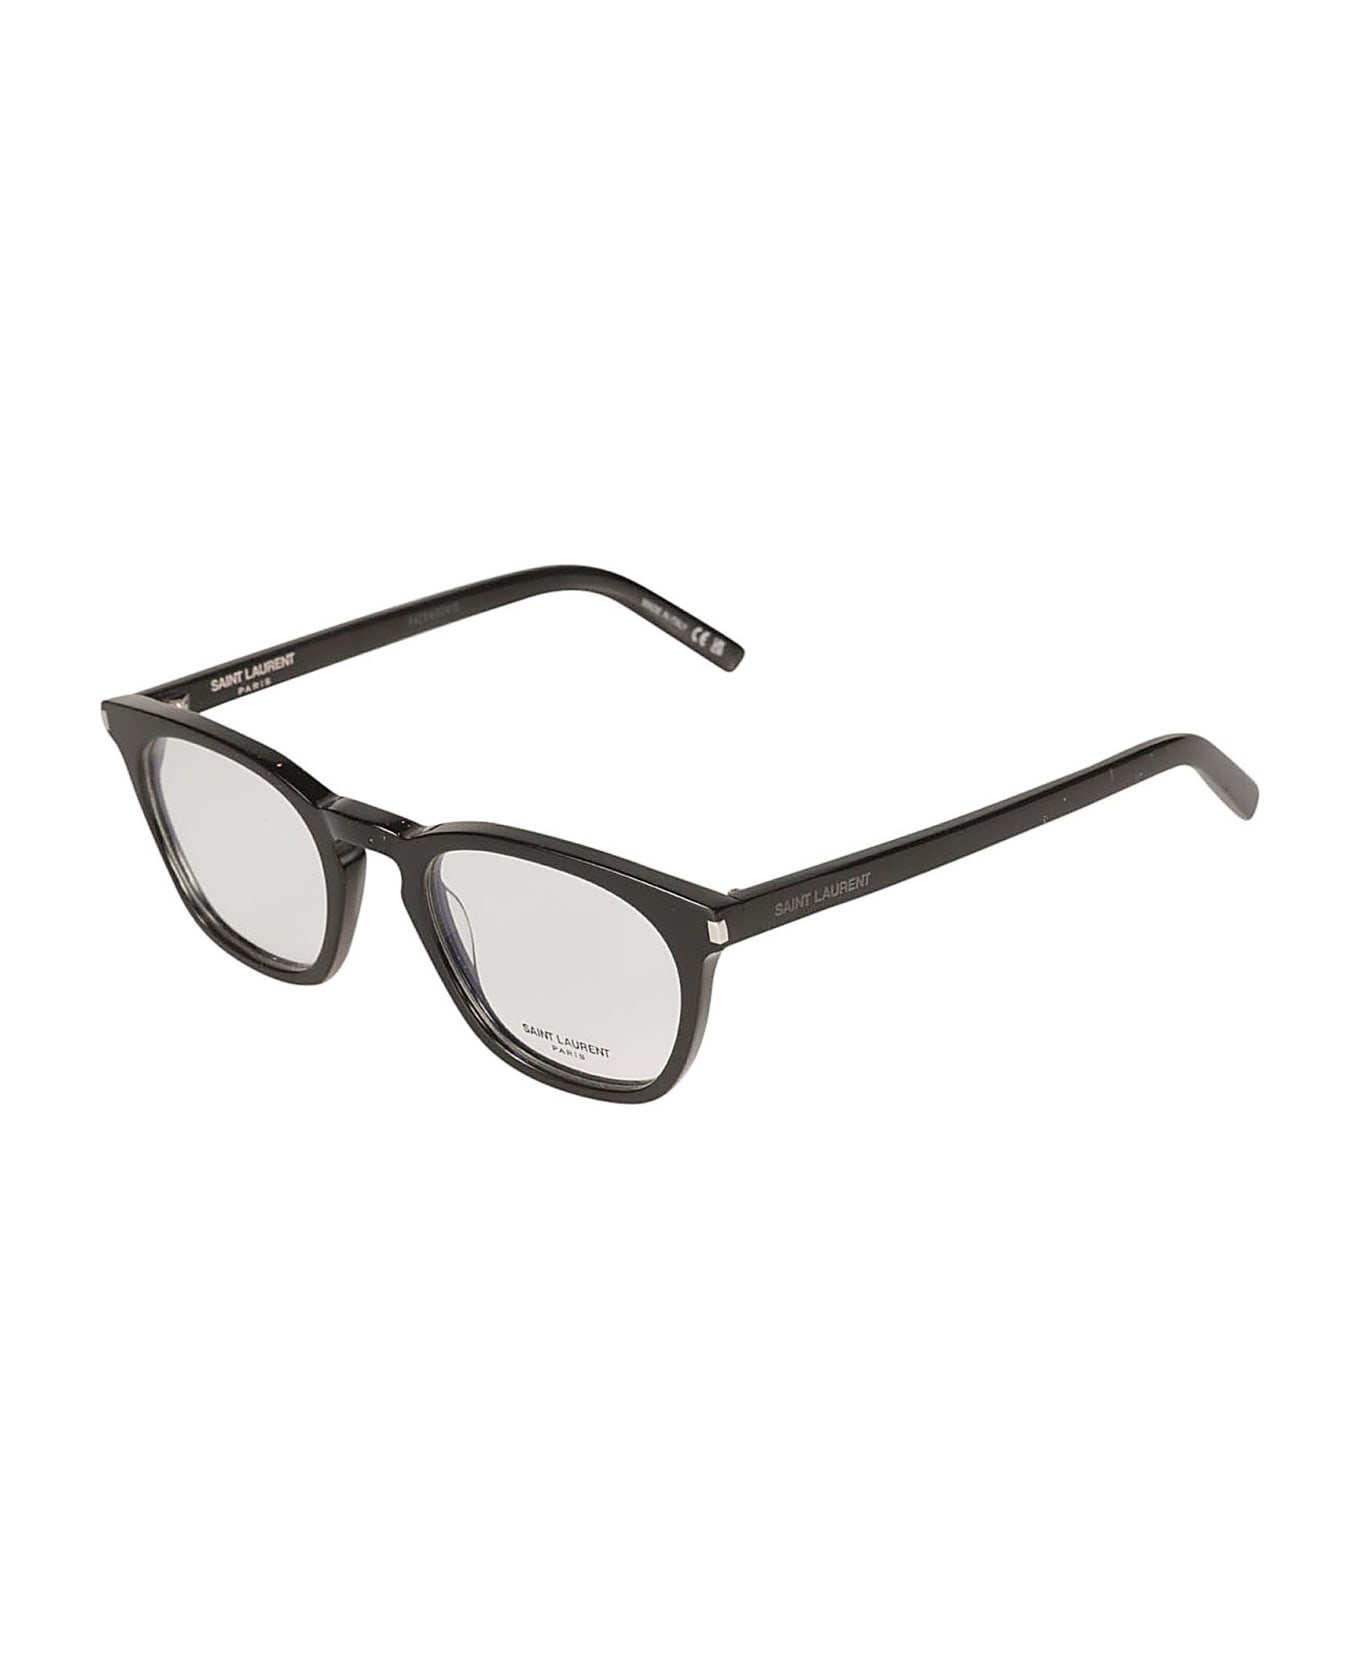 Saint Laurent Eyewear Round Frame Classic Glasses - Black/Transparent